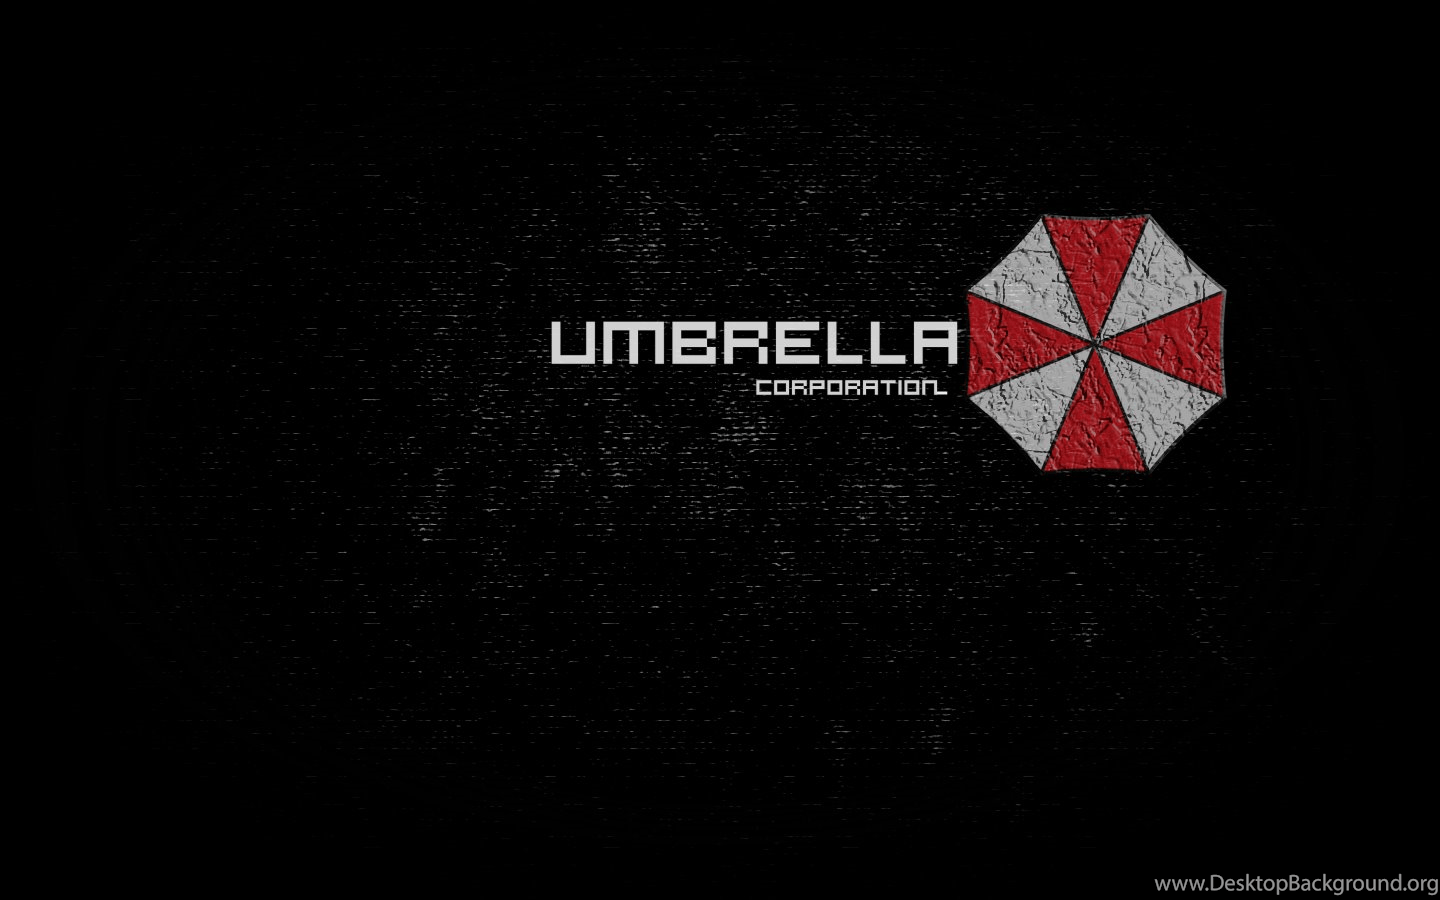 Download Umbrella Corporation Wallpaper Background 8262 1920x1080. Desktop Background